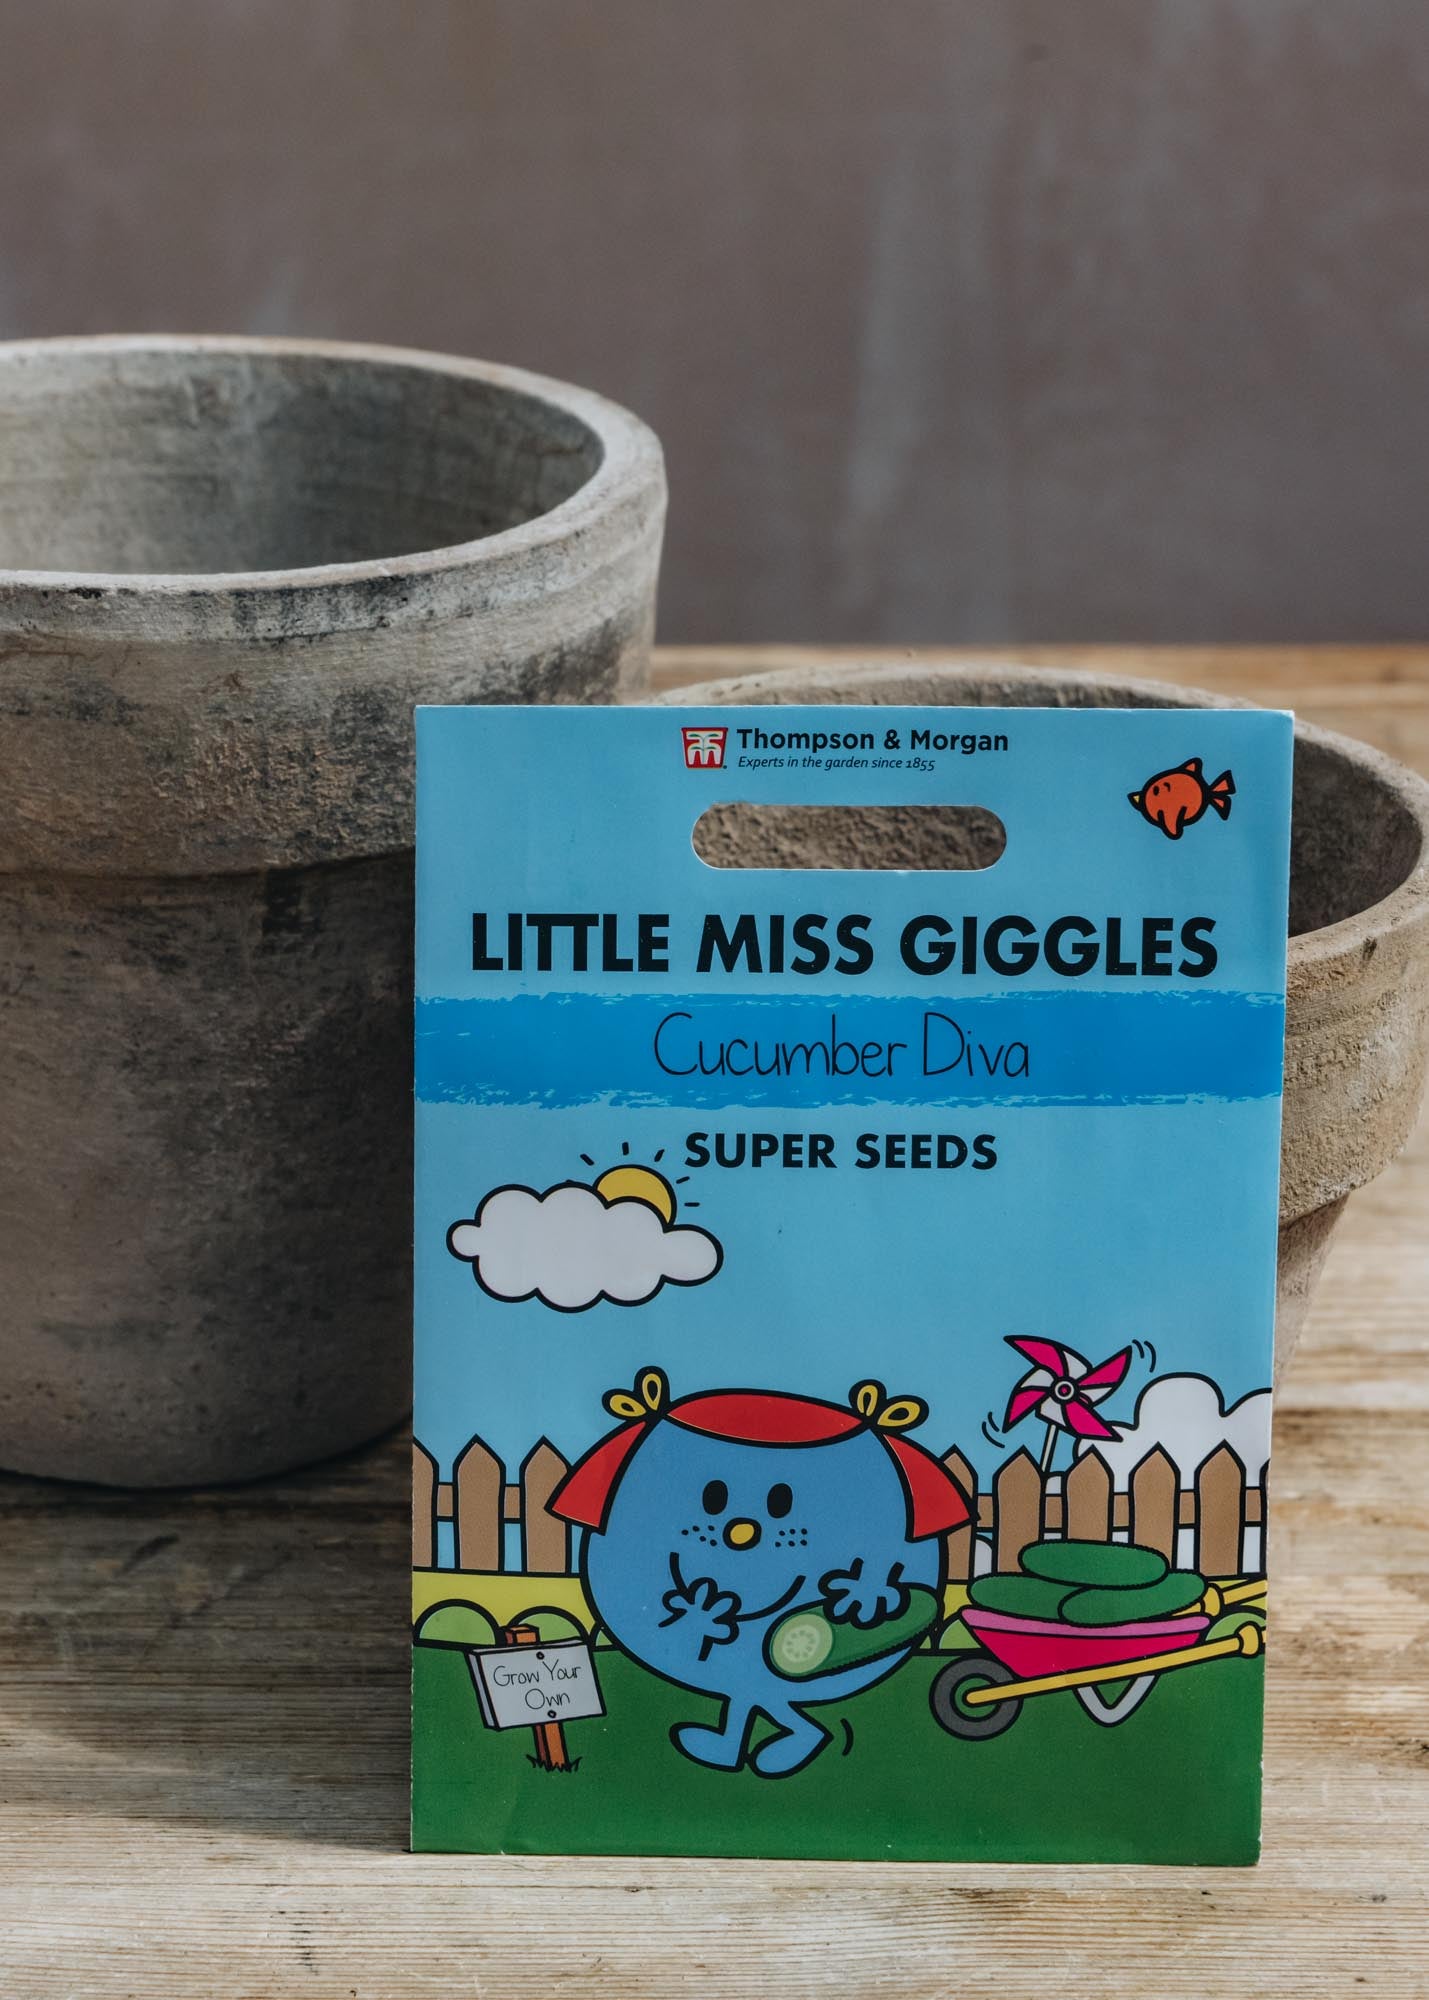 Little Miss Giggles Cucumber Diva Seeds